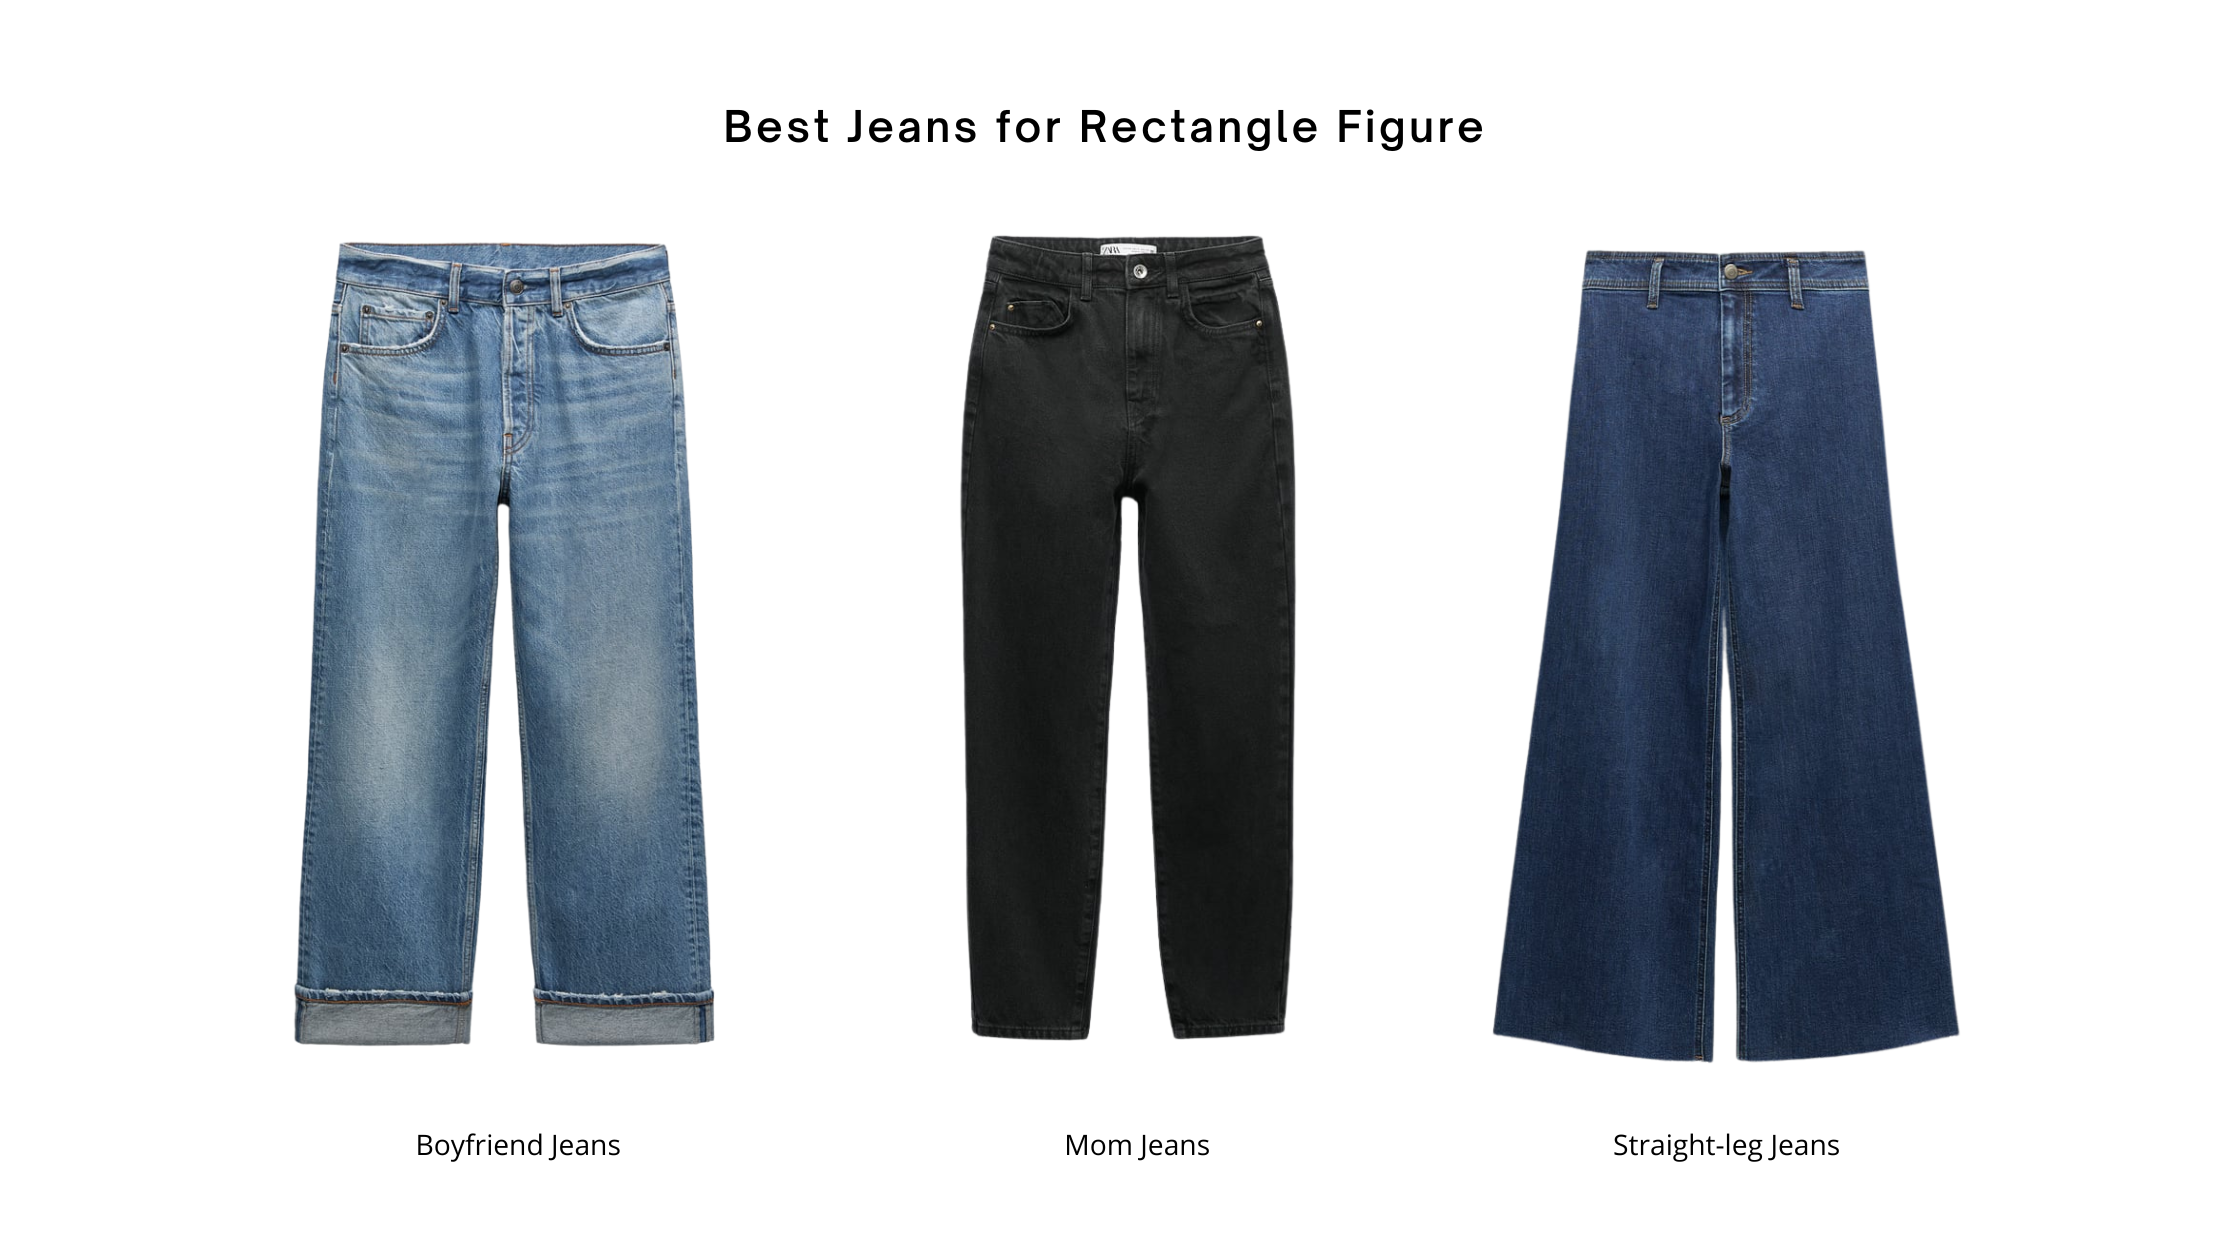 Best jeans for apple body shape